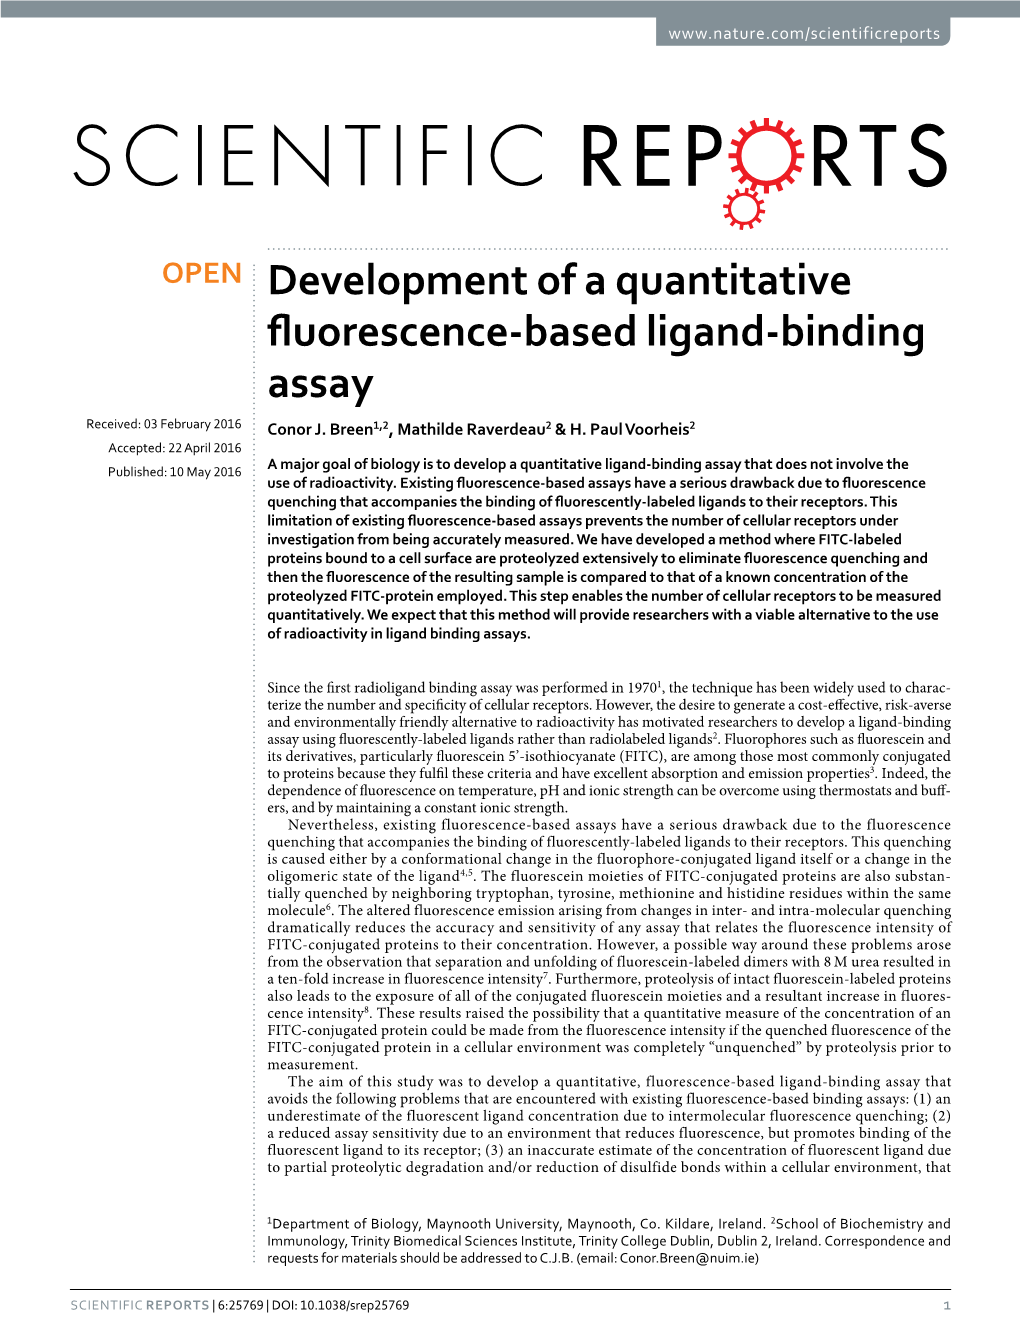 Development of a Quantitative Fluorescence-Based Ligand-Binding Assay Received: 03 February 2016 Conor J